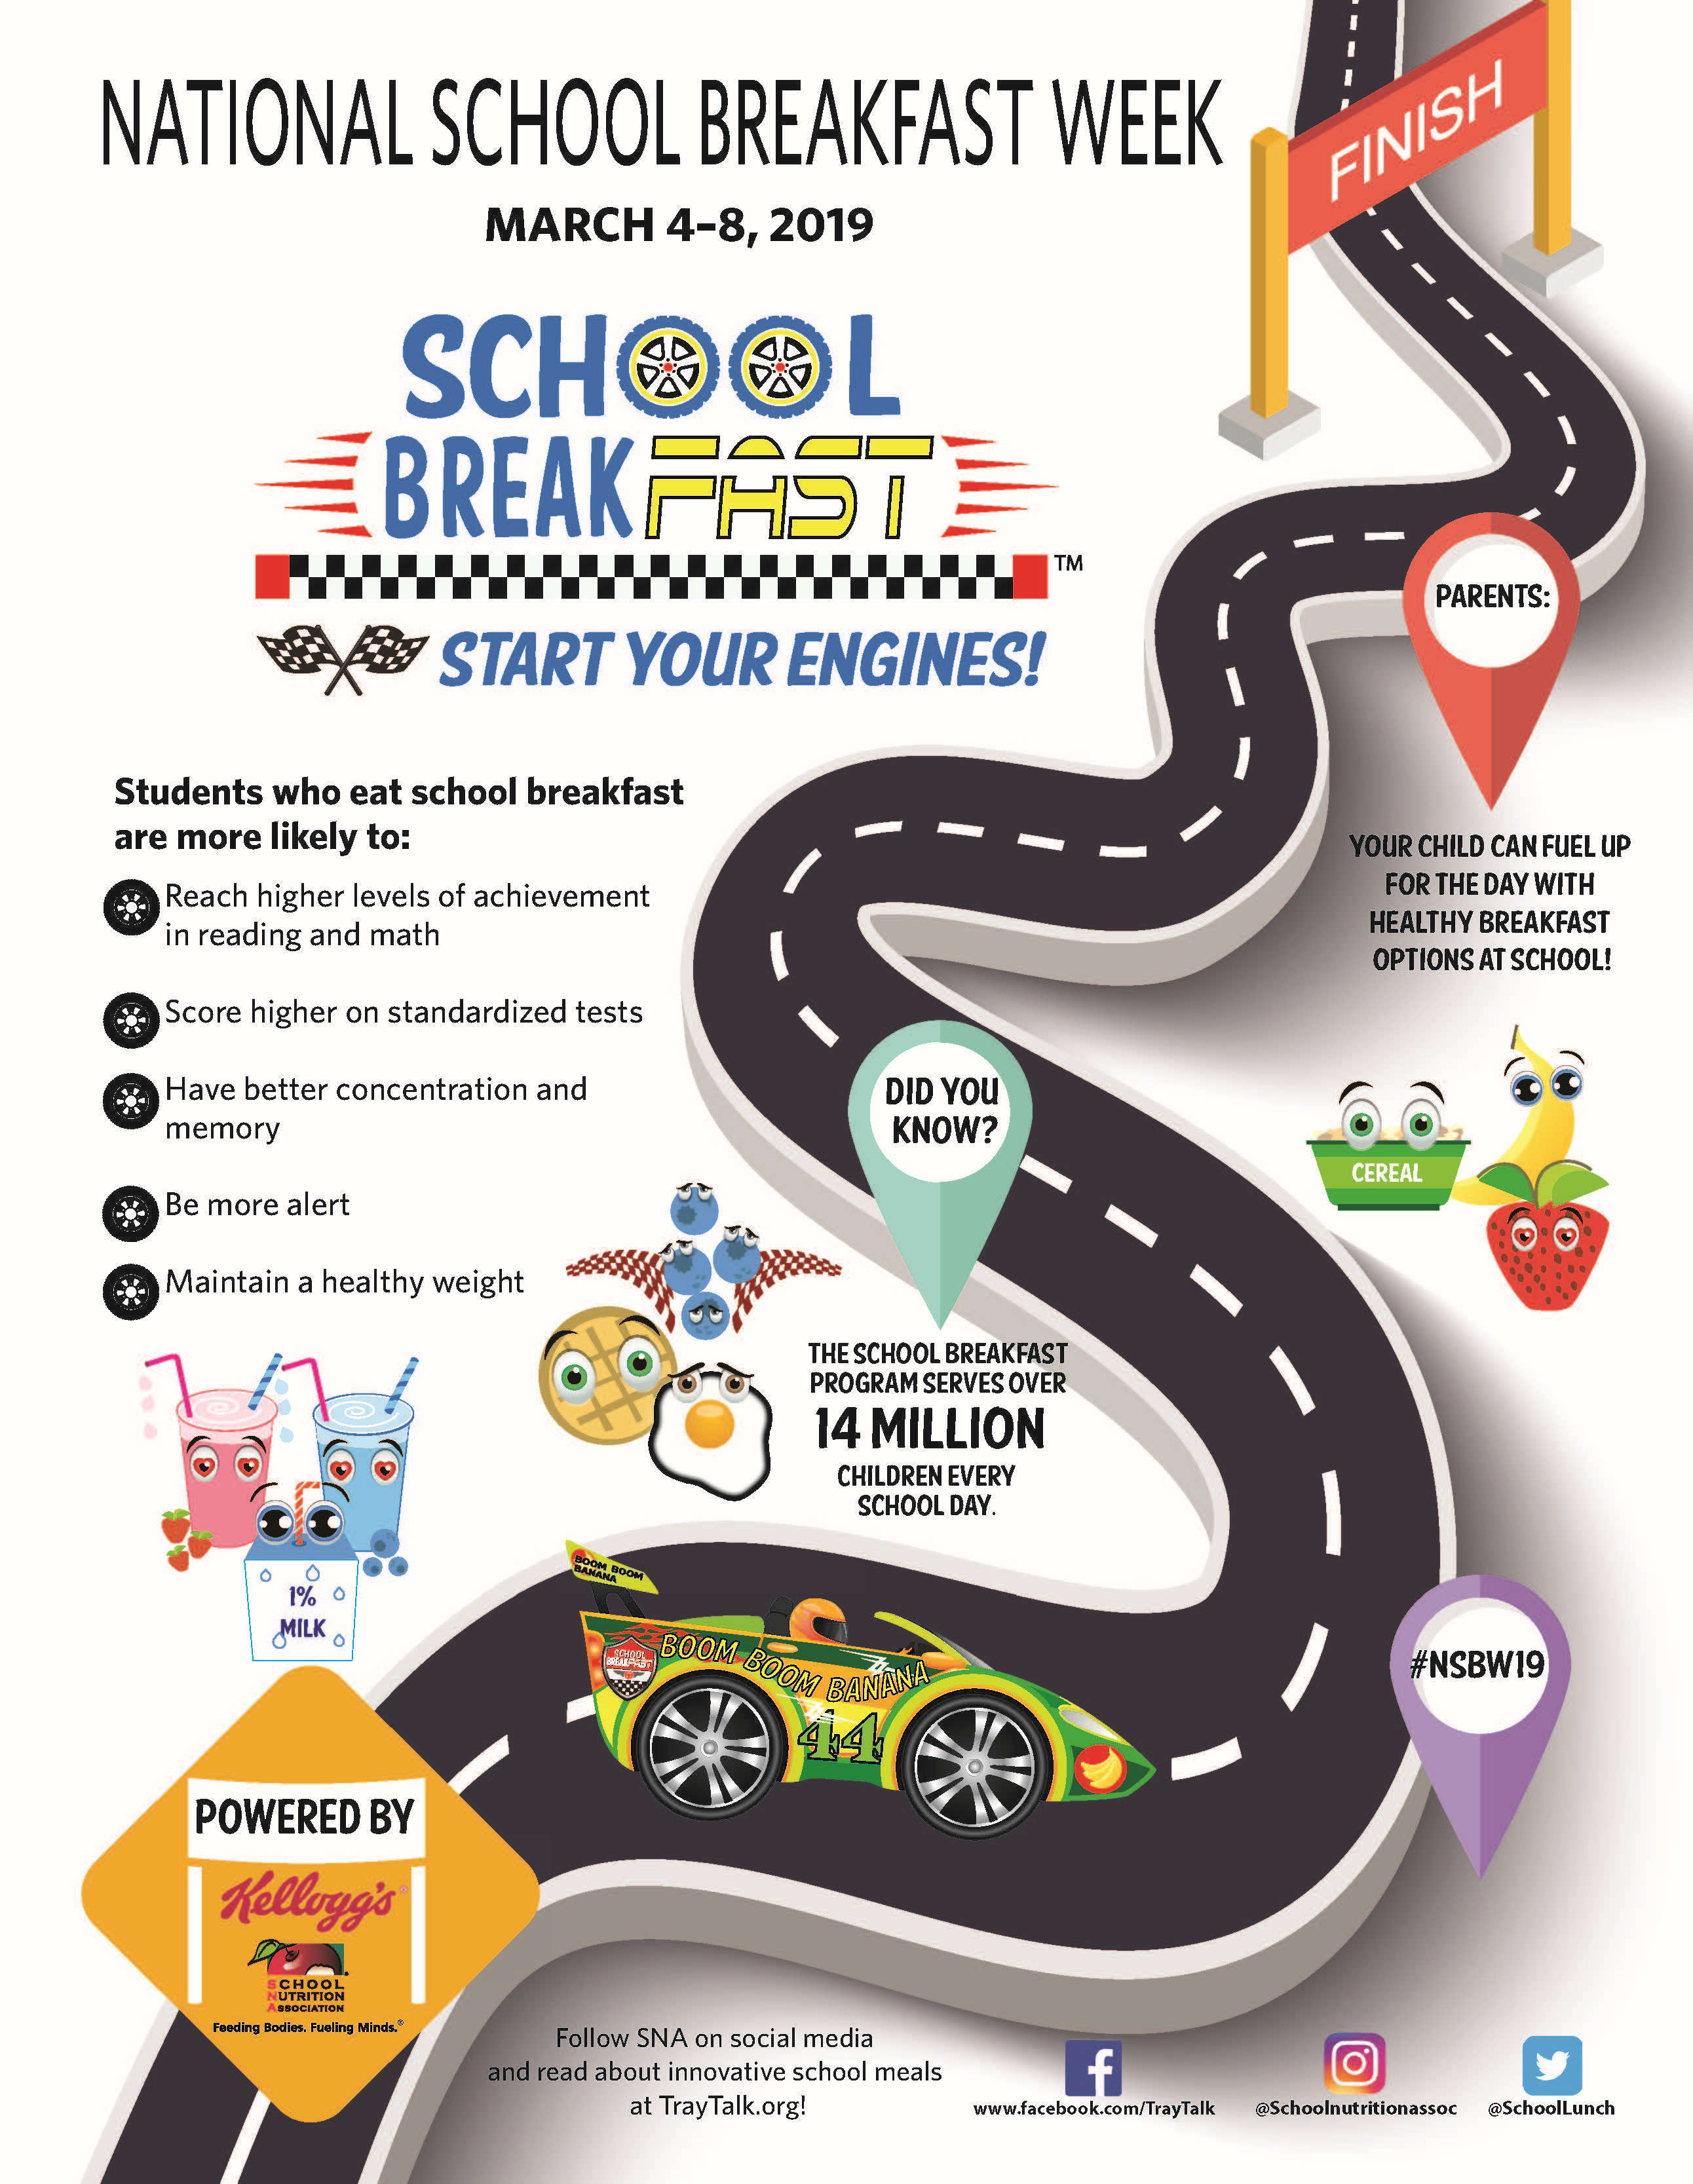 National School Breakfast Week 2019 infographic